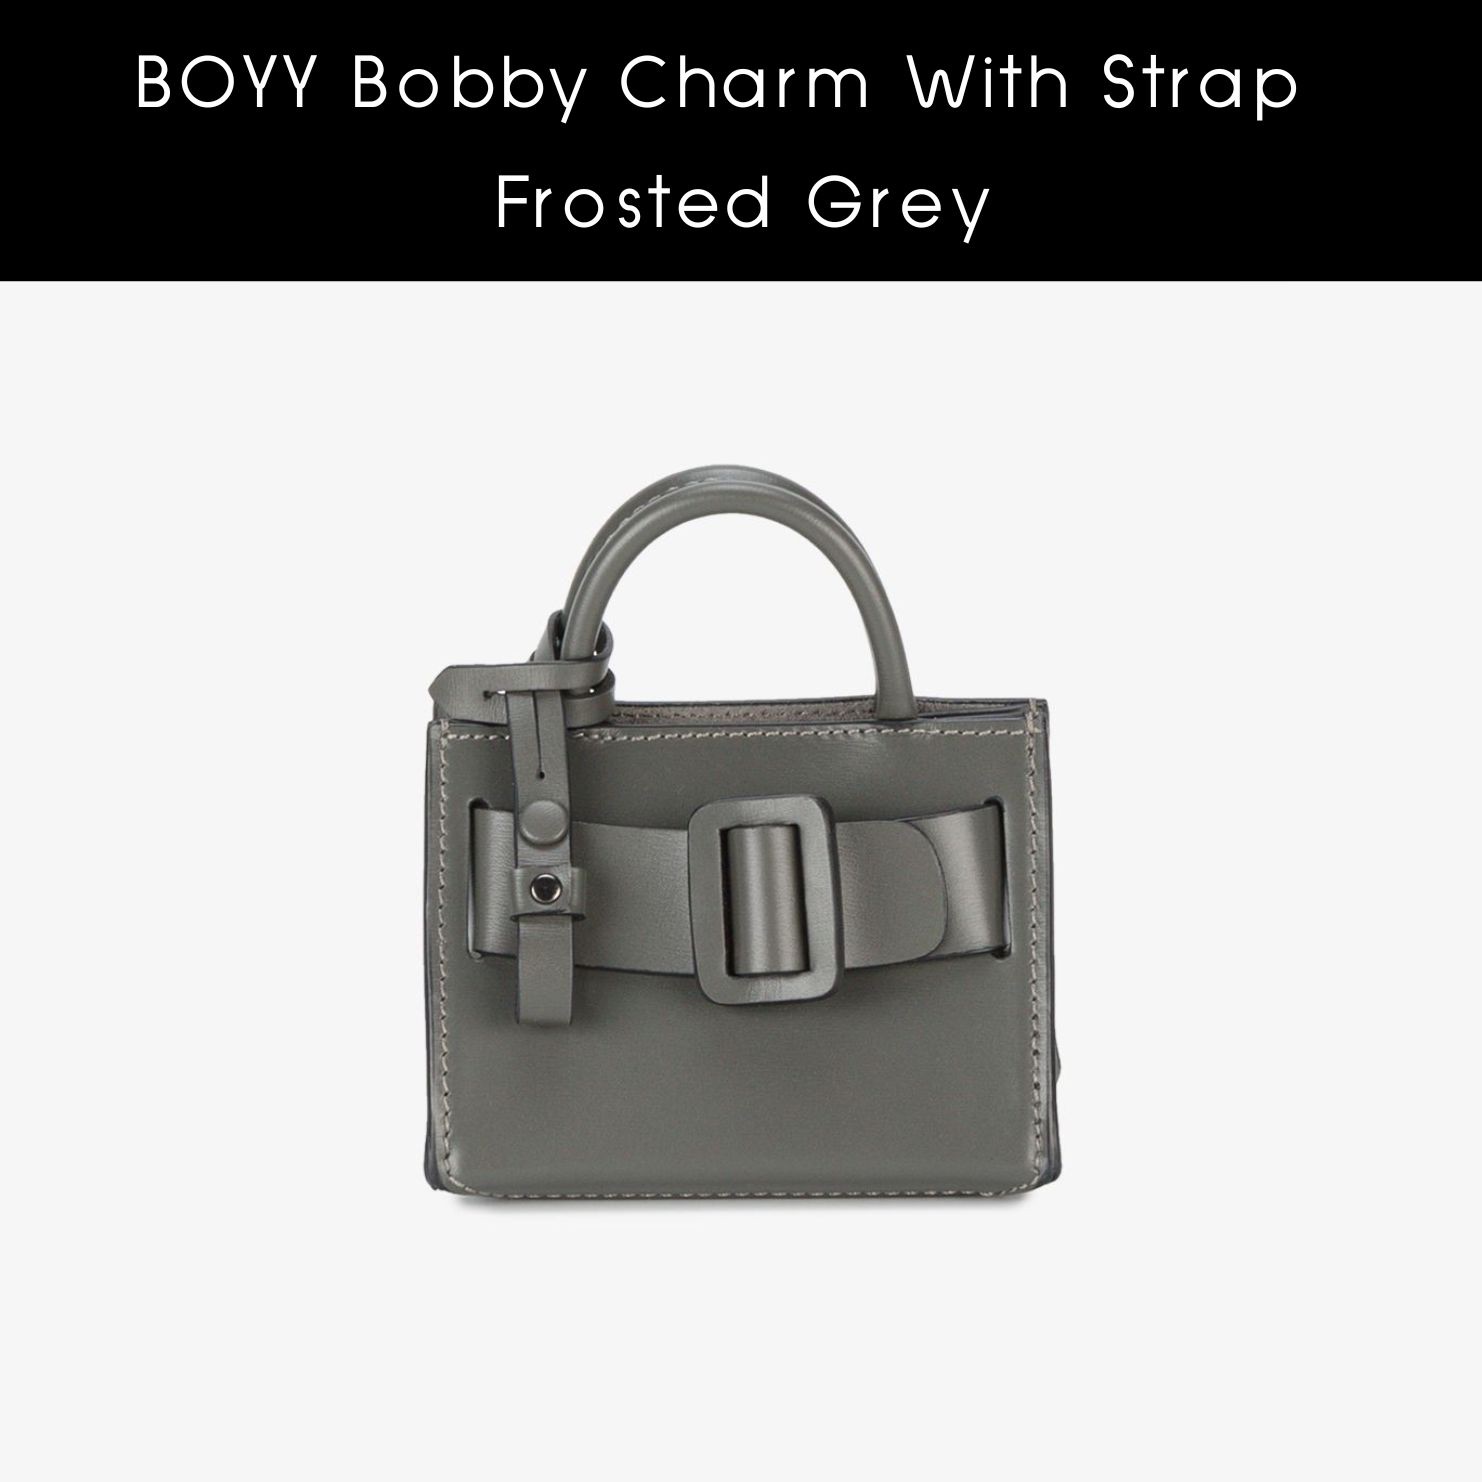 Boyy Bobby Charm with Strap Bag in Meringue